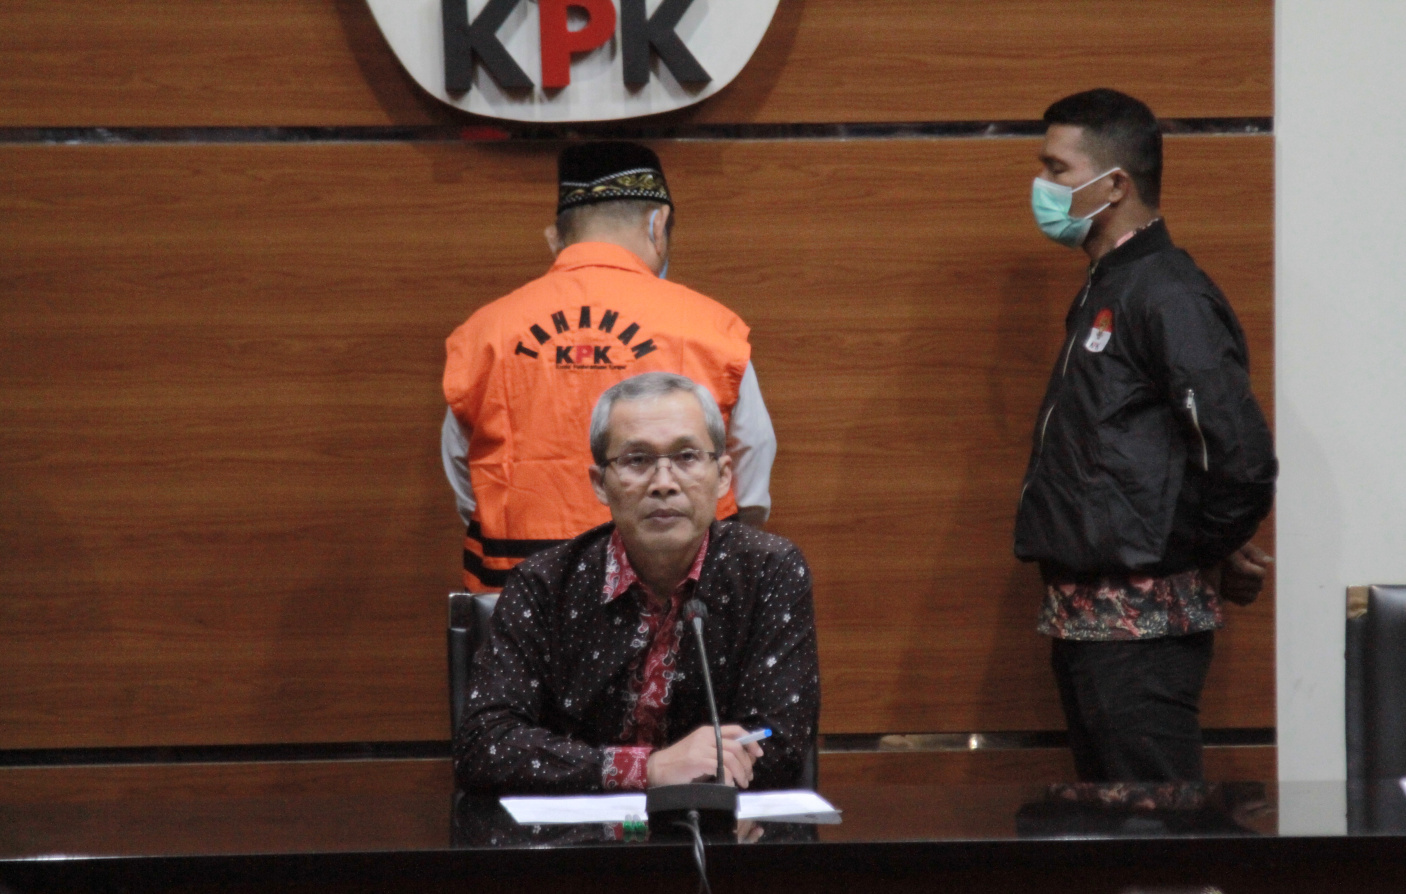 Mantan Bupati Sidoarjo Syaifullah resmi di tahan KPK terkait kasus gratifikasi di kalangan Pemkab Sidoarjo sebesar Rp 15 miliar (Ashar/SinPo.id)